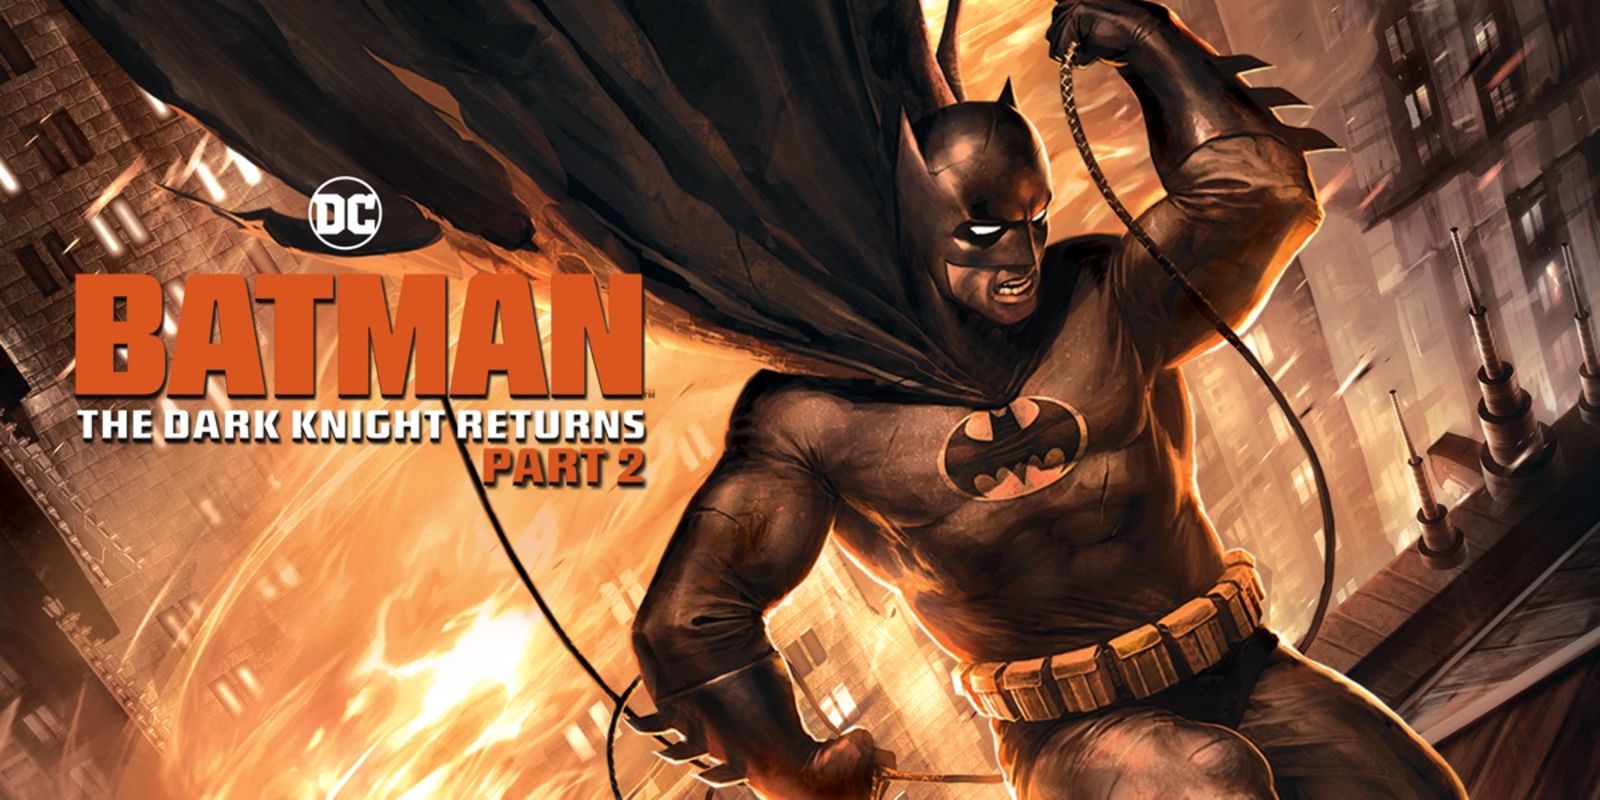 Poster artwork for Batman The Dark Knight Returns Part 2